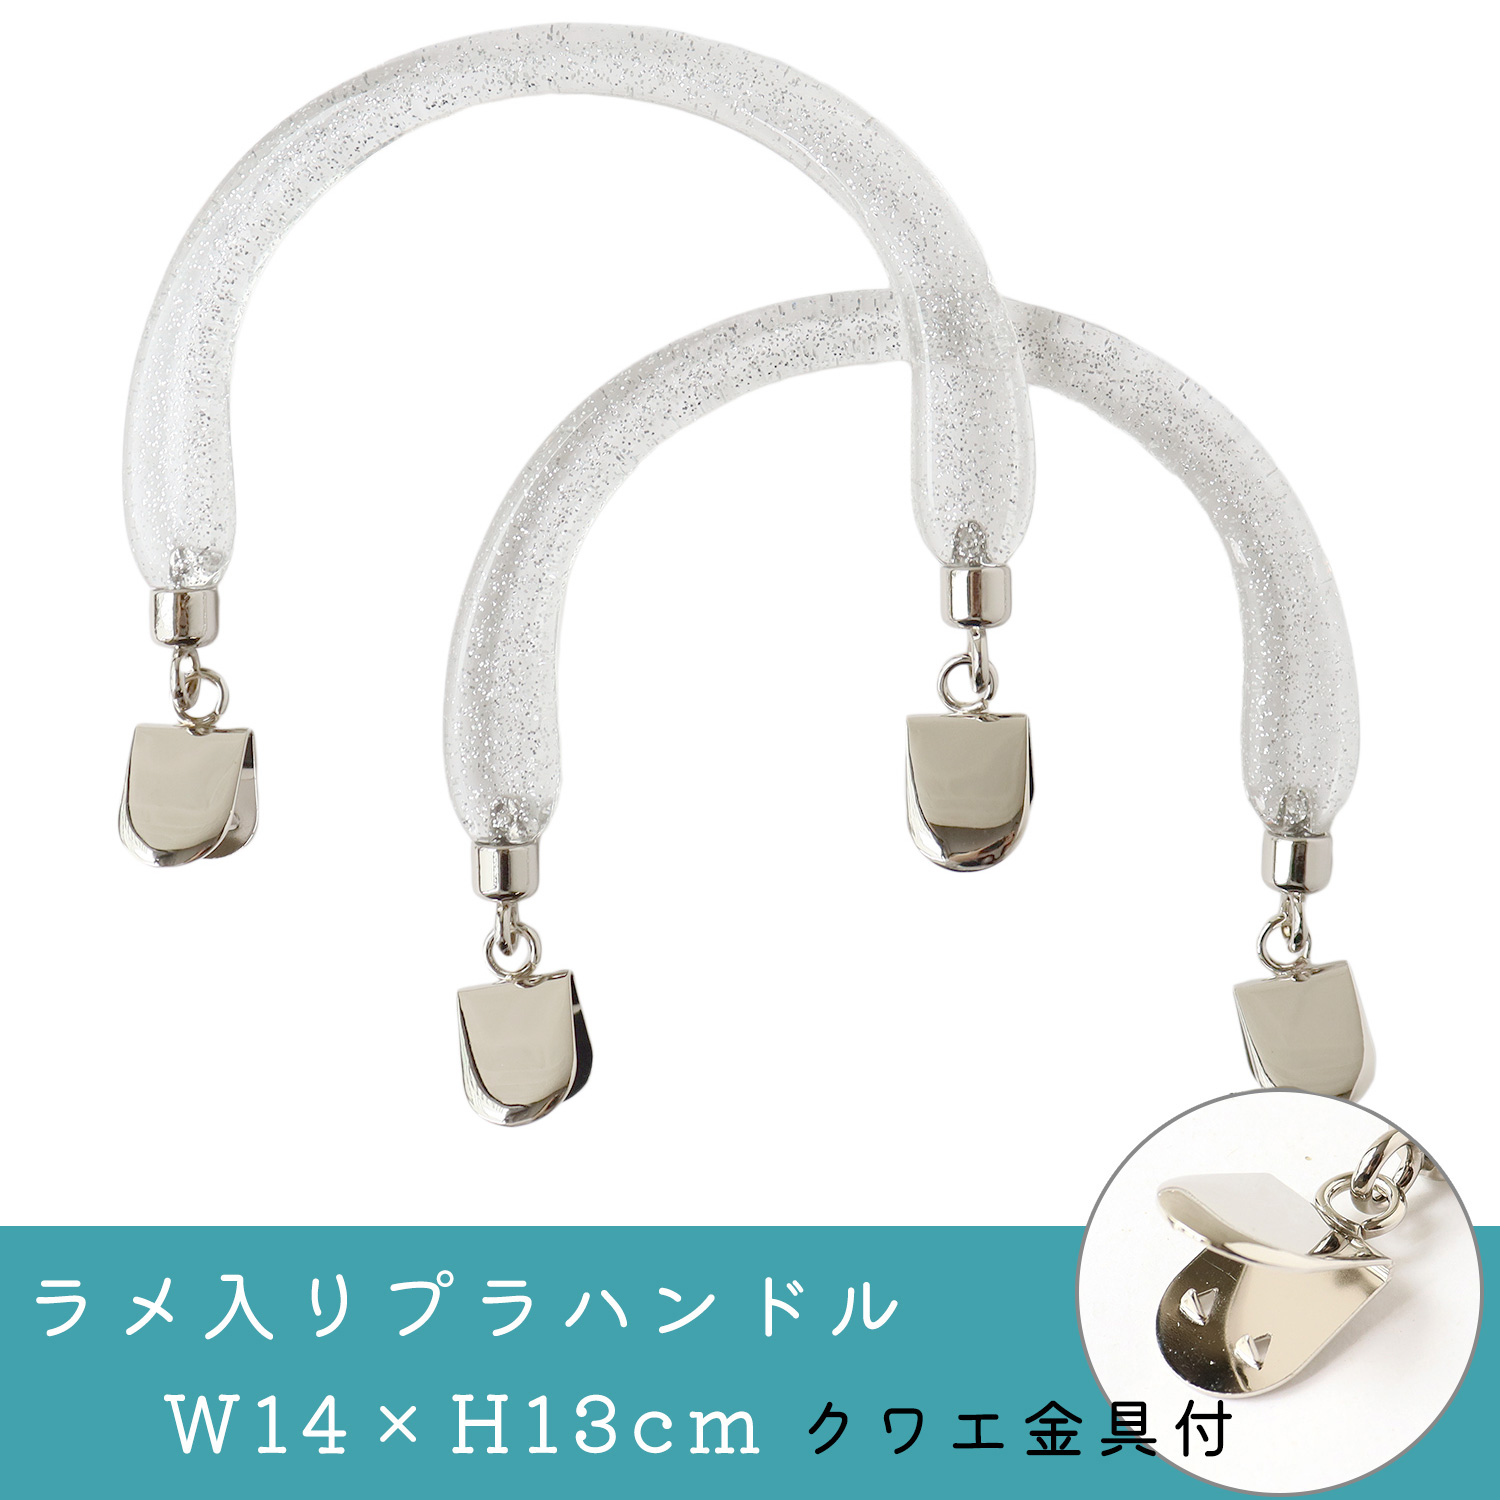 K2538 Glitter Bag Handles W14 x H13cm (set)